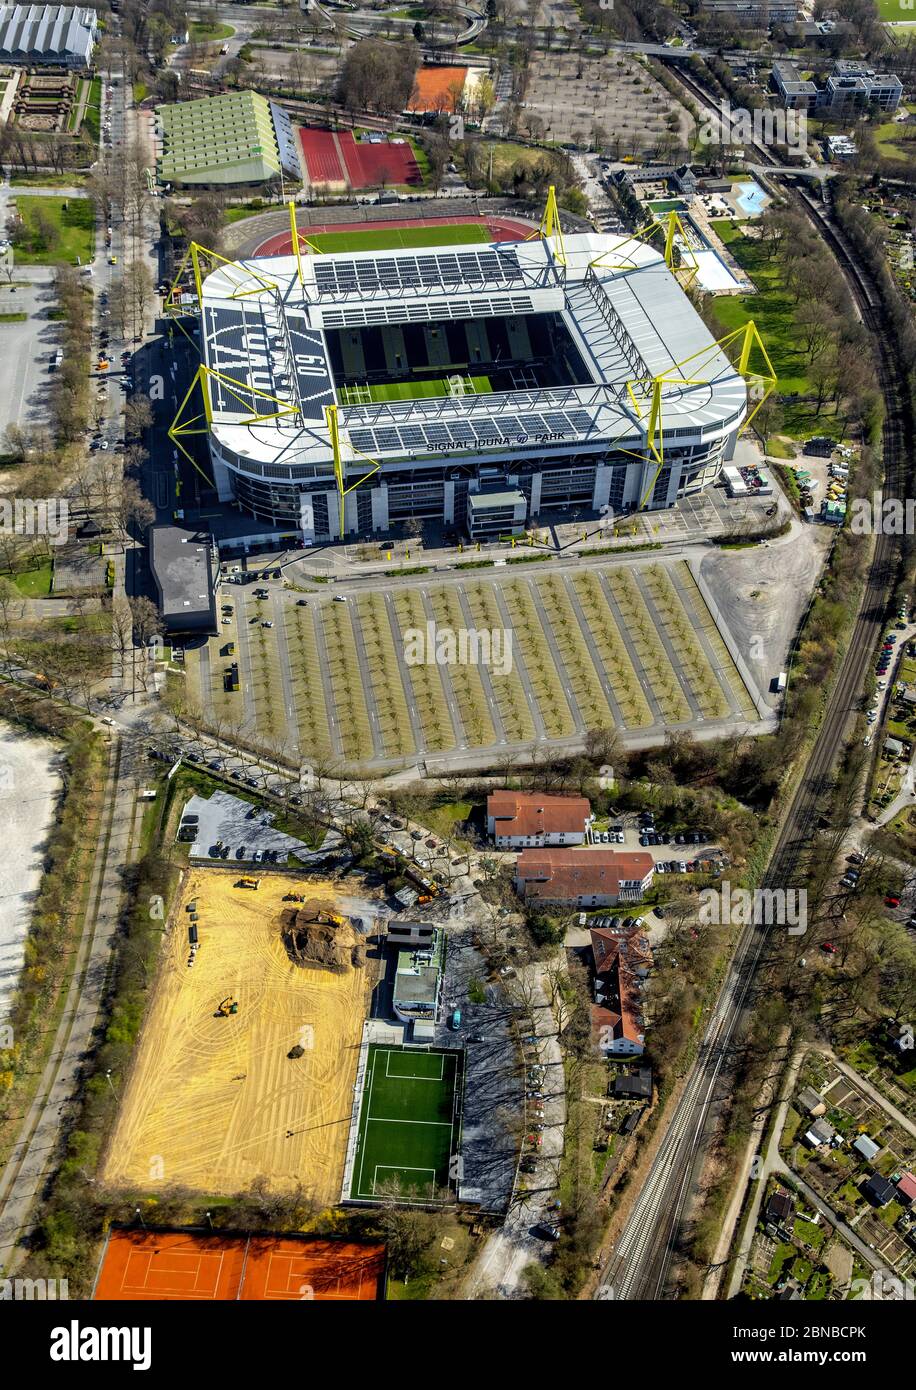 , Signal Iduna Park with the stadiums Westfalenstadion and Rote Erde in Dortmund, 04.04.2017, aerial view, Germany, North Rhine-Westphalia, Ruhr Area, Dortmund Stock Photo